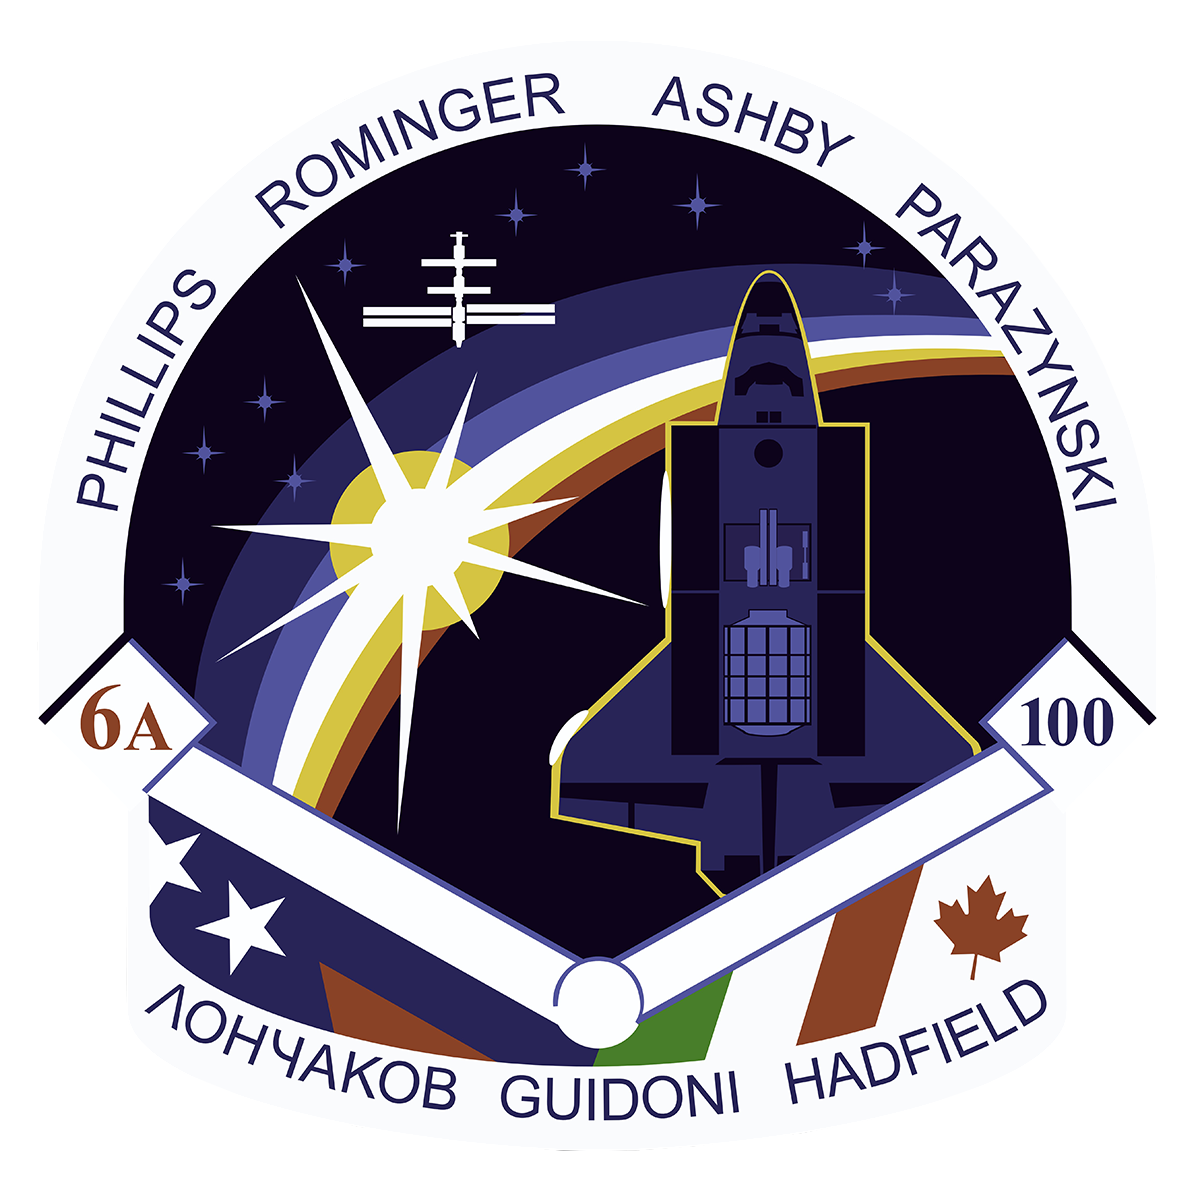 STS-100 (Endeavour)